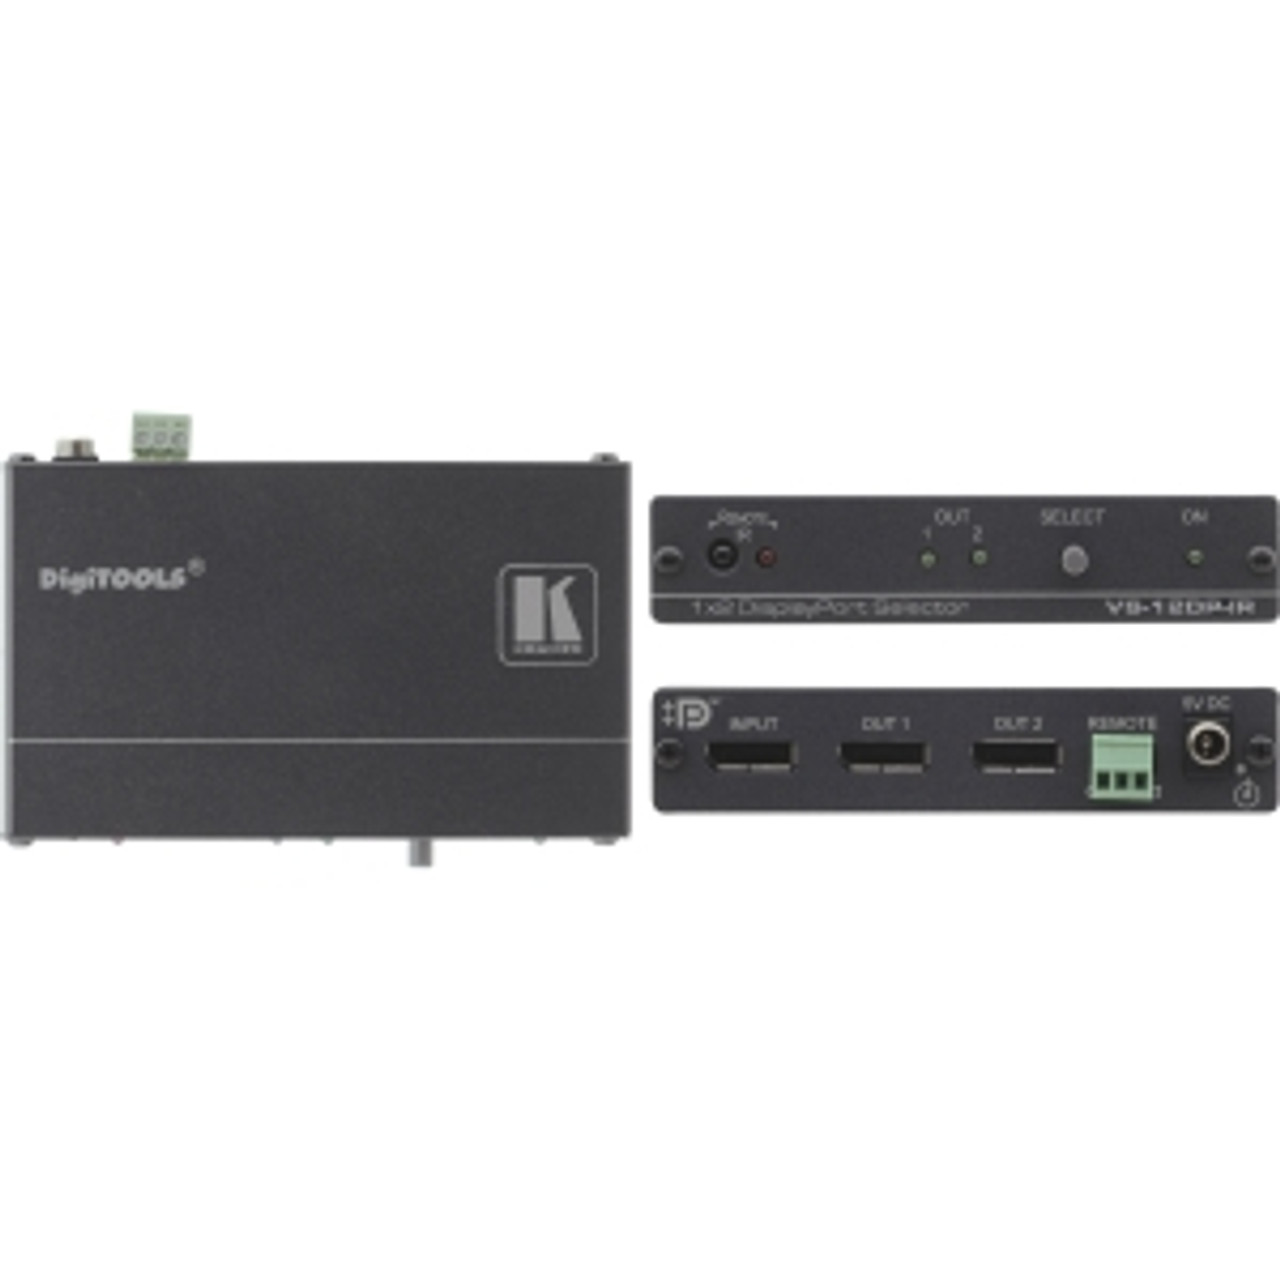 VS-12DP-IR Kramer VS-12DP-IR Video Switch 1 x DisplayPort Digital Audio/Video In, 2 x DisplayPort Digital Audio/Video Out 2560 x 1600 WQXGA